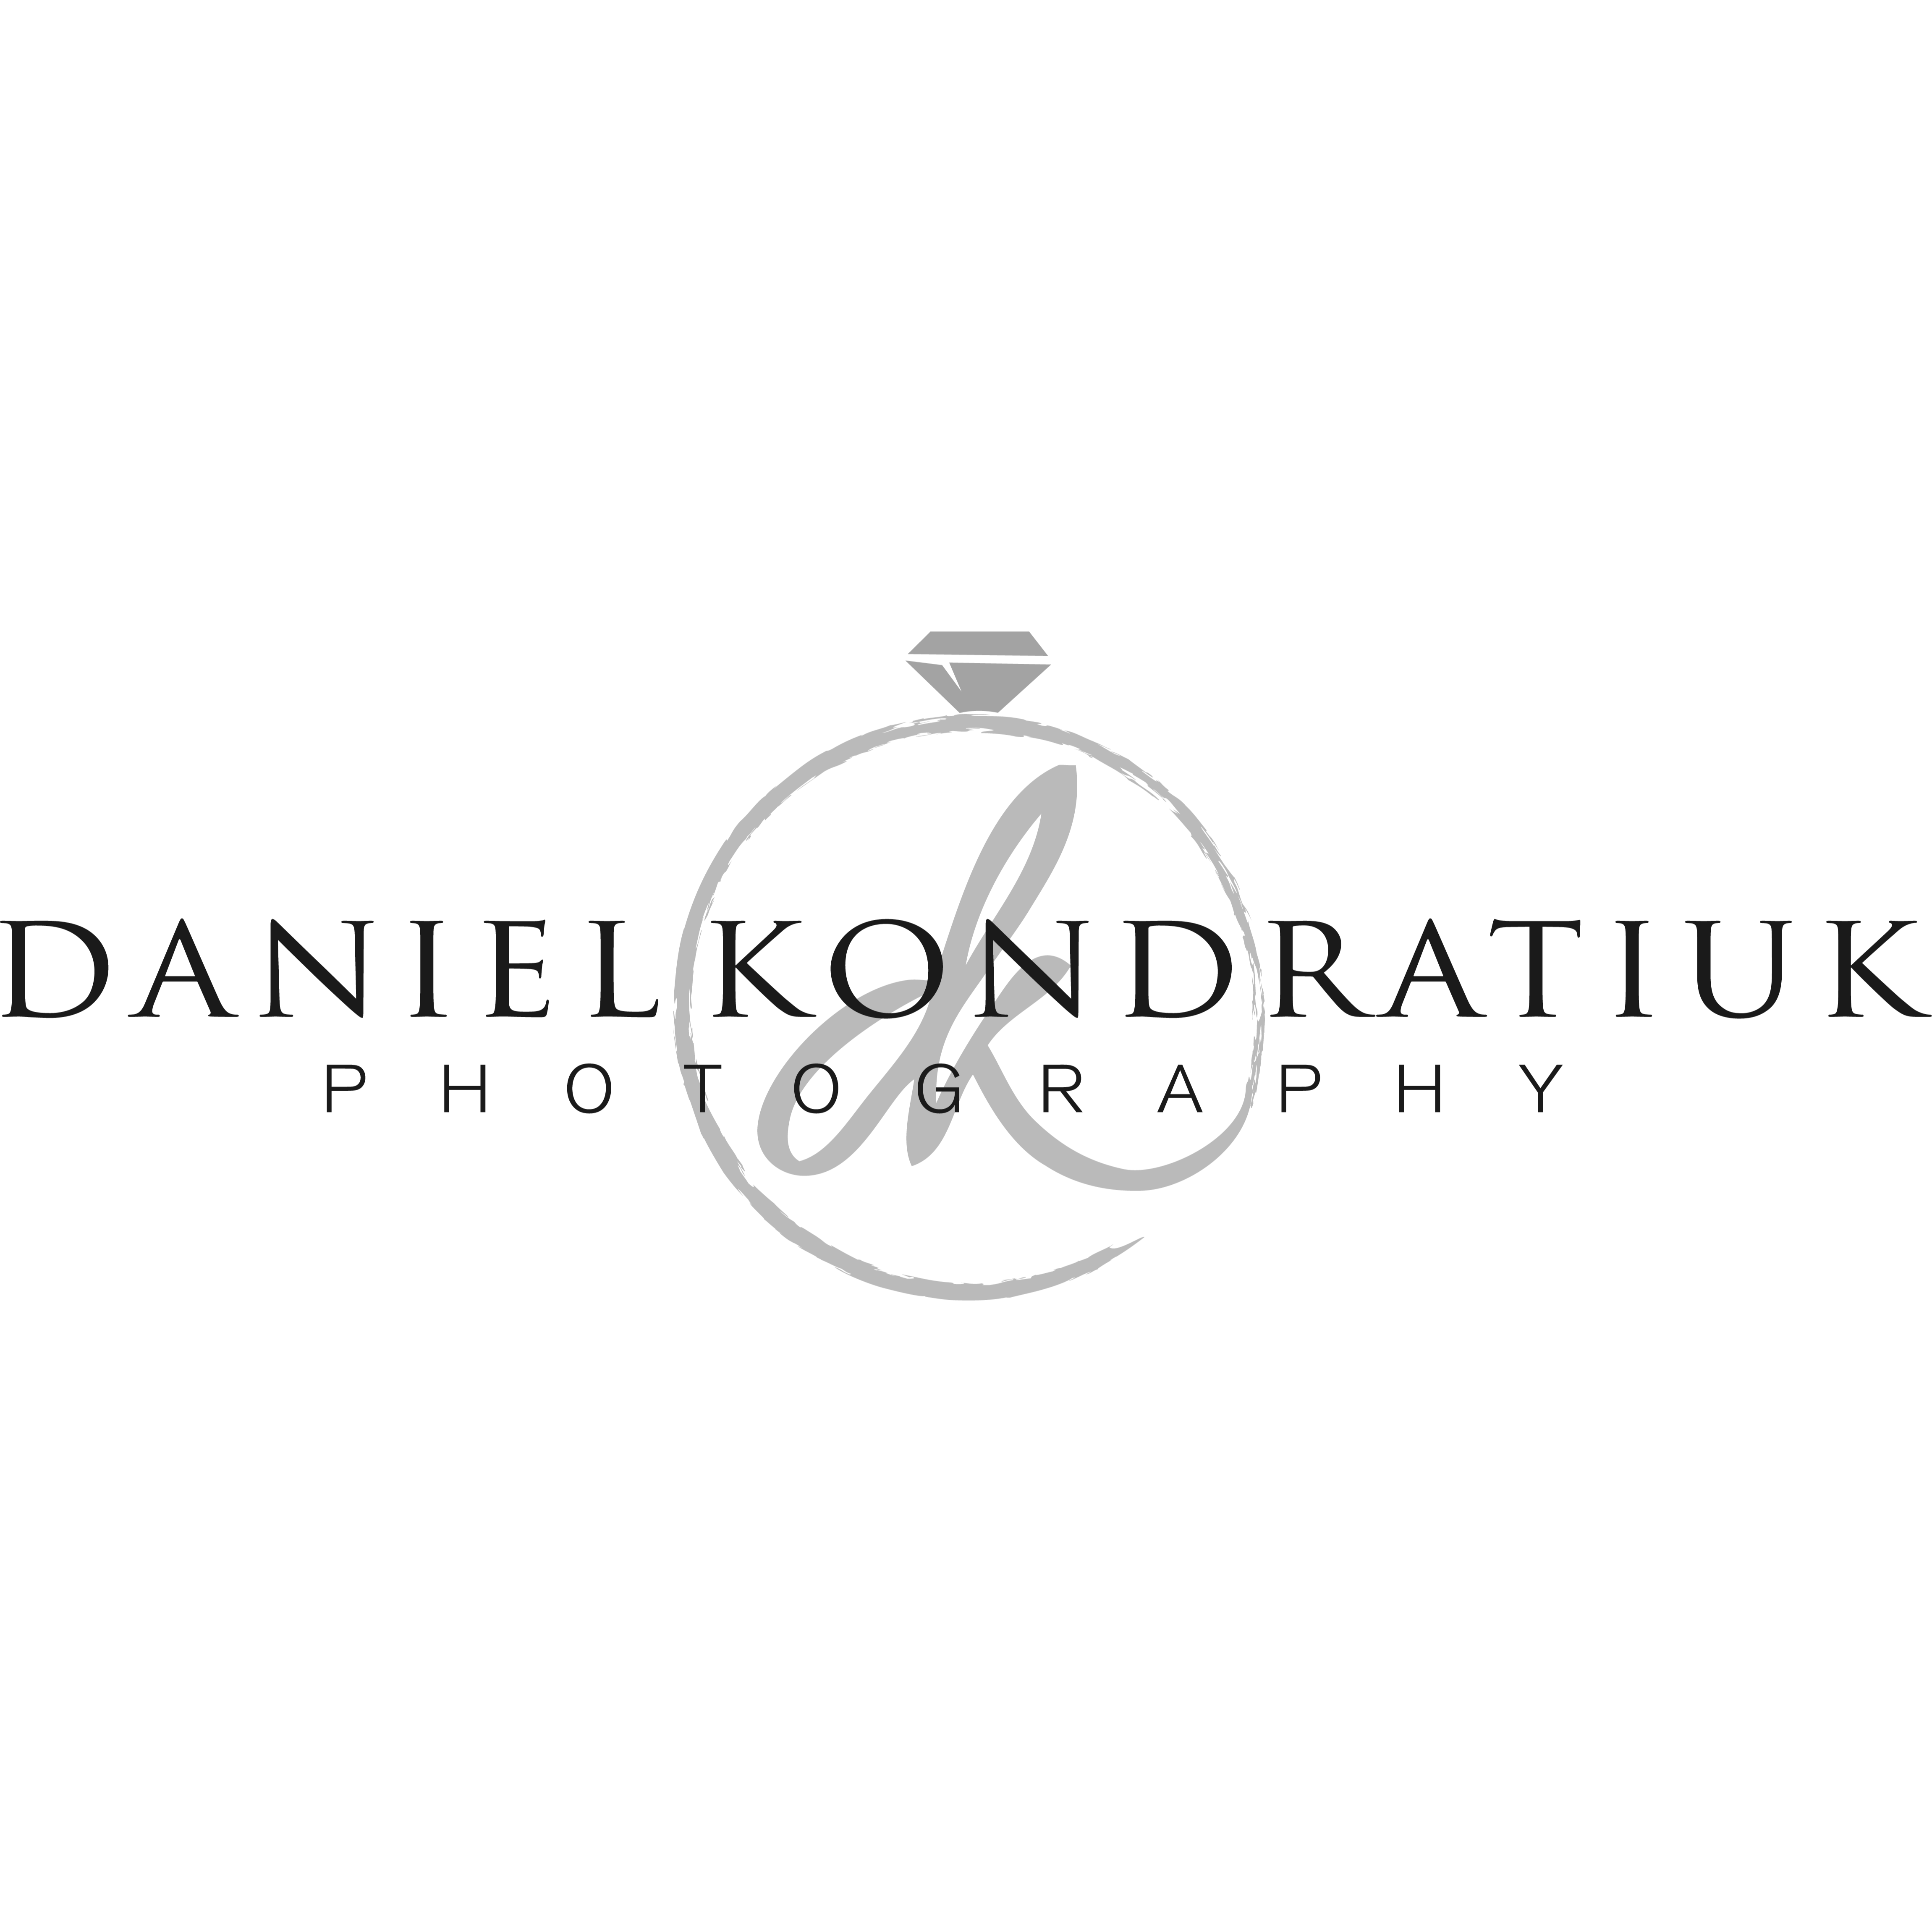 Daniel Kondratiuk Photography Logo